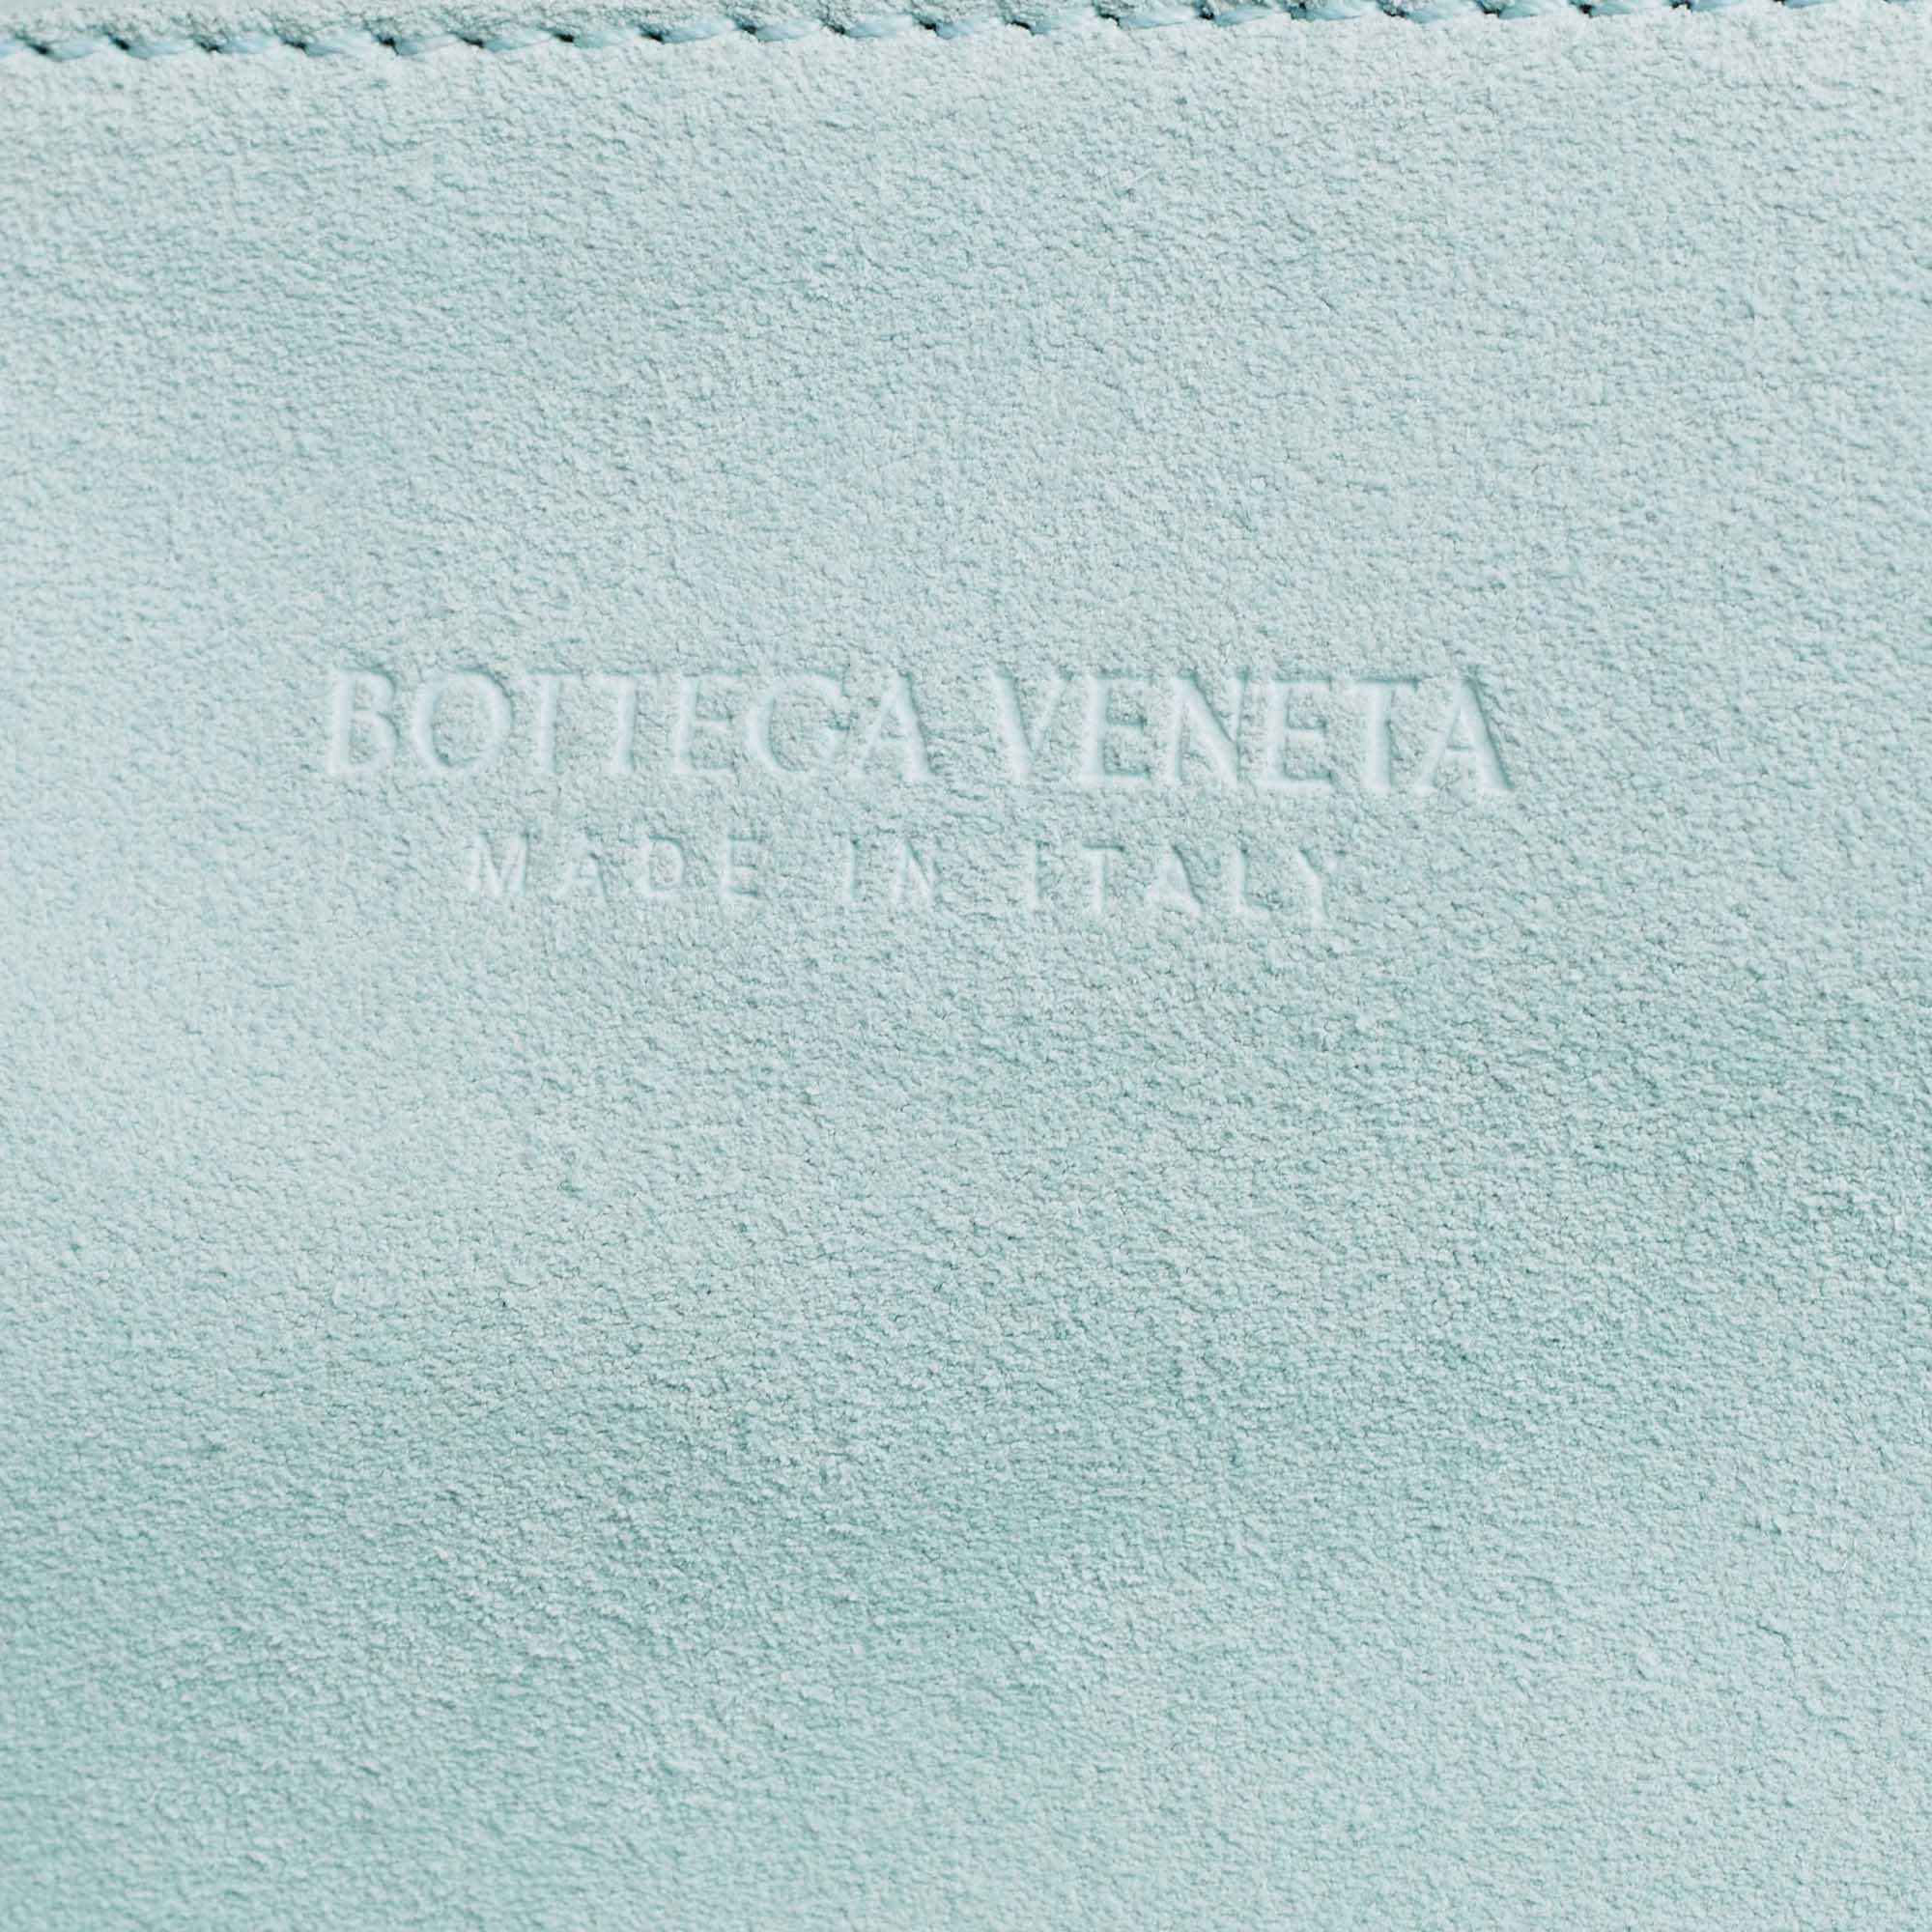 Bottega Veneta grand fourre-tout Arco bleu foncé en cuir Intrecciato 6